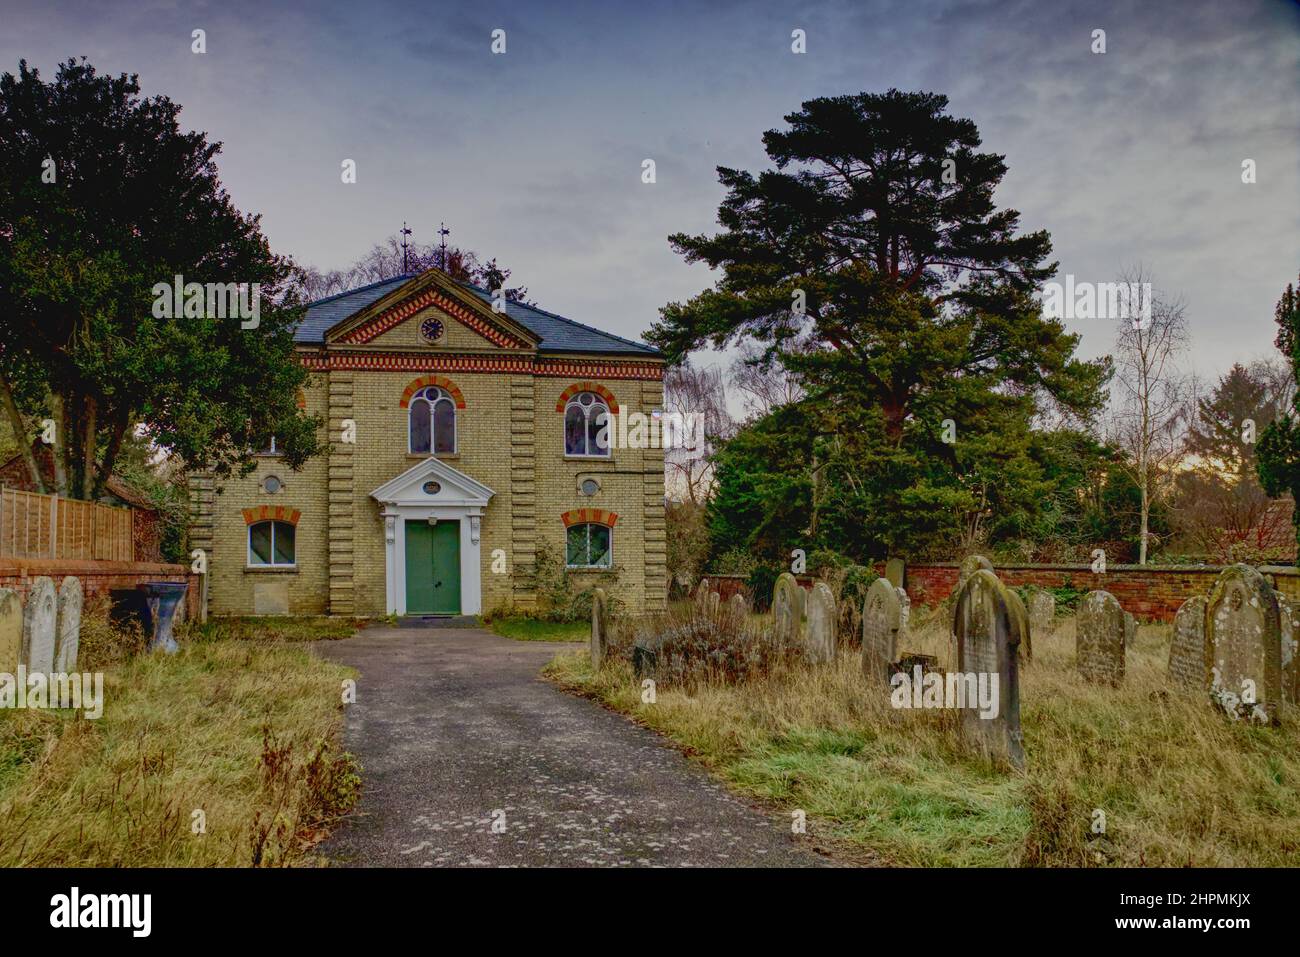 Baptist Church or Chapel at Sharnbrook, Bedfordshire, England, UK Stock Photo